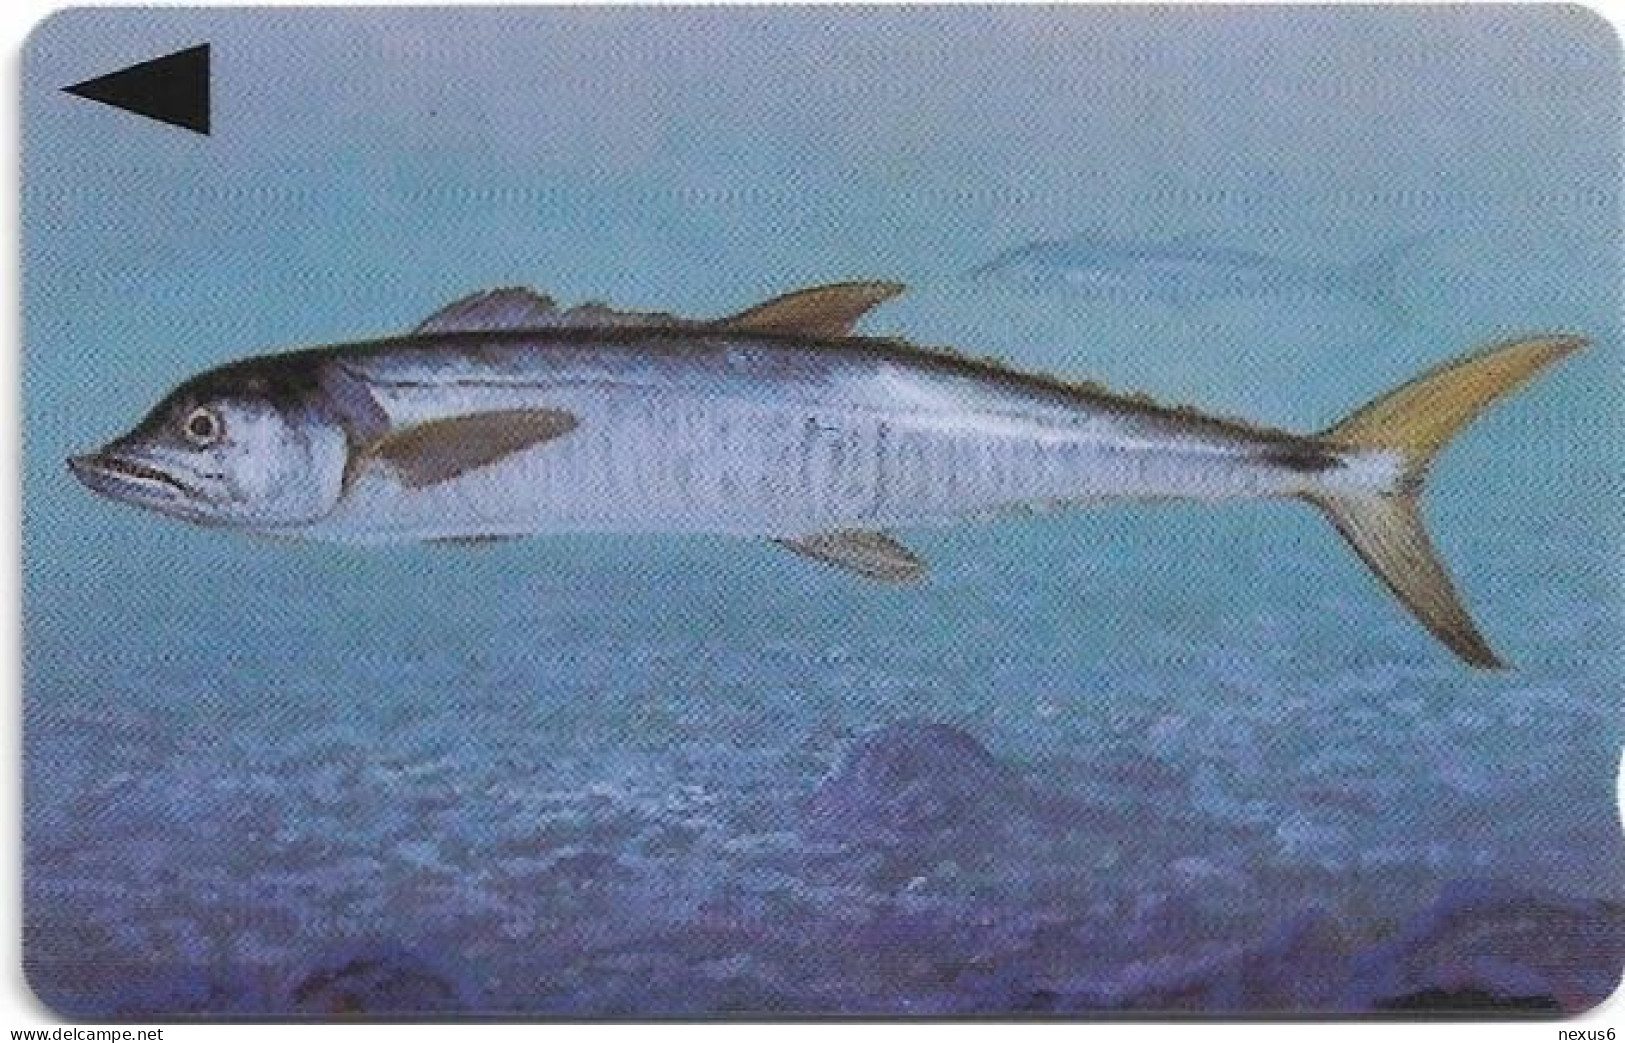 Bahrain - Batelco (GPT) - Fish Of Bahrain - Spanish Mackerel - 39BAHR (Normal 0), 1996, 50Units, Mint No Blister - Bahrein